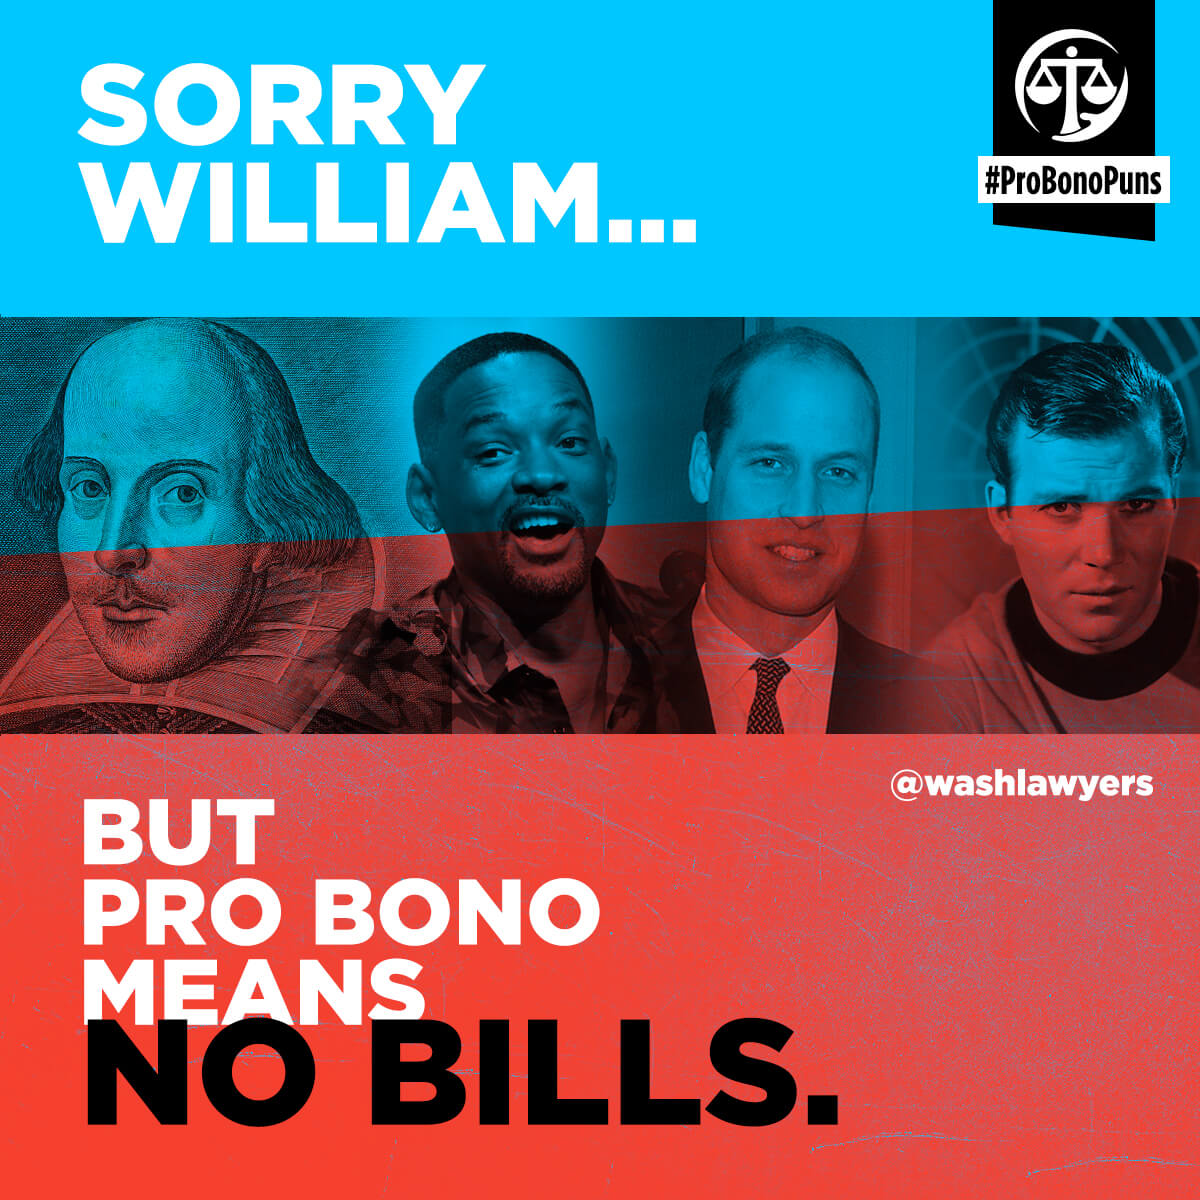 Graphic: Pro bono pun - William Shakespeare